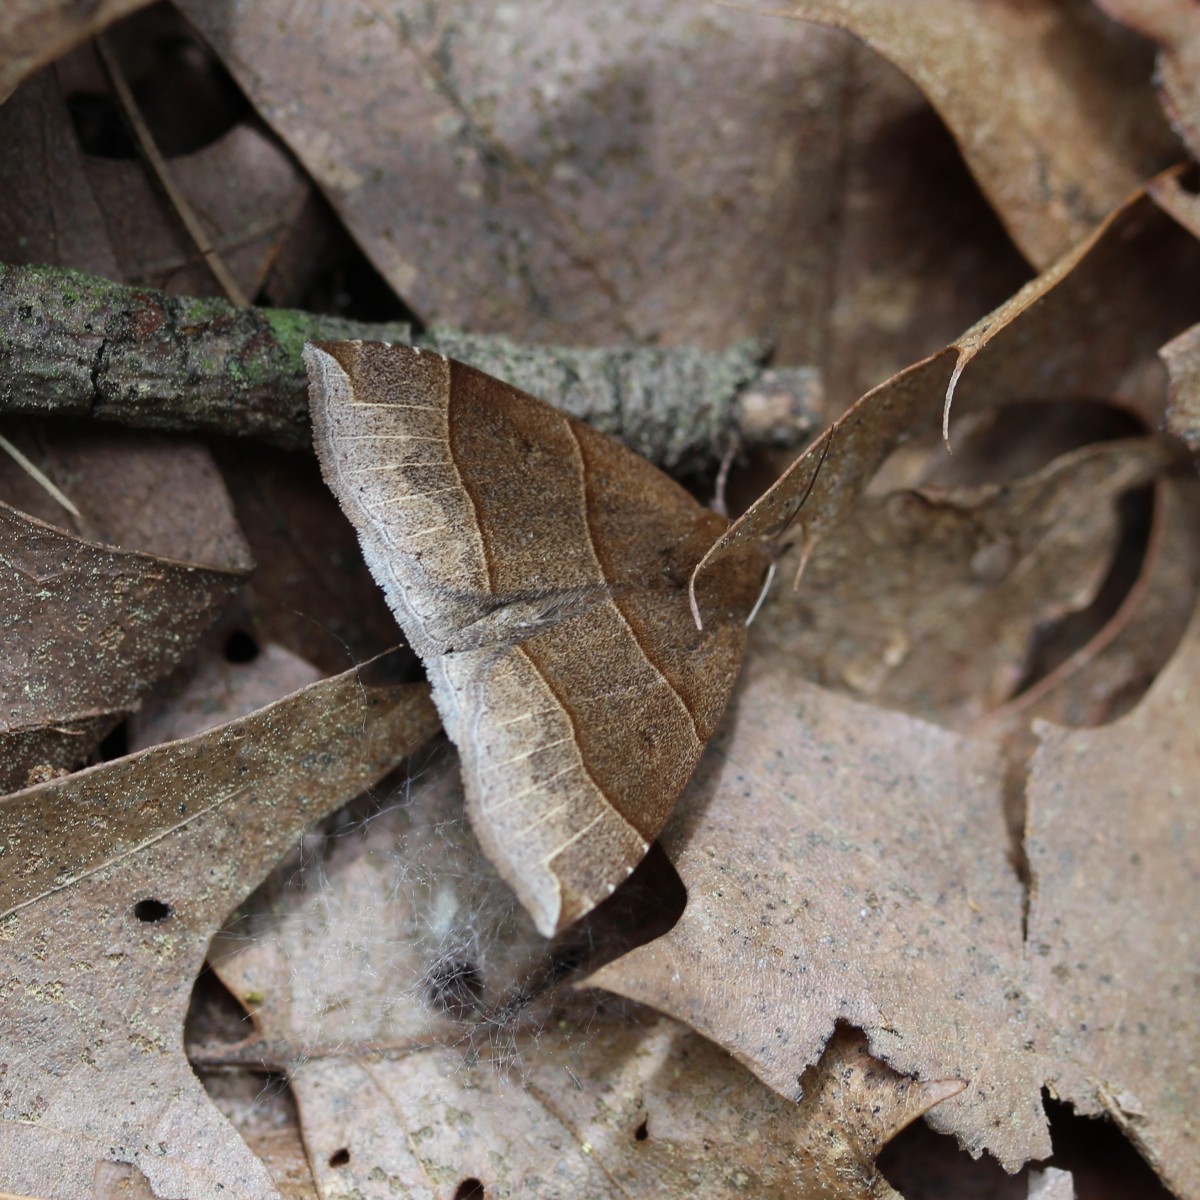 8. Maple Looper Moth (Parallelia bistriaris)